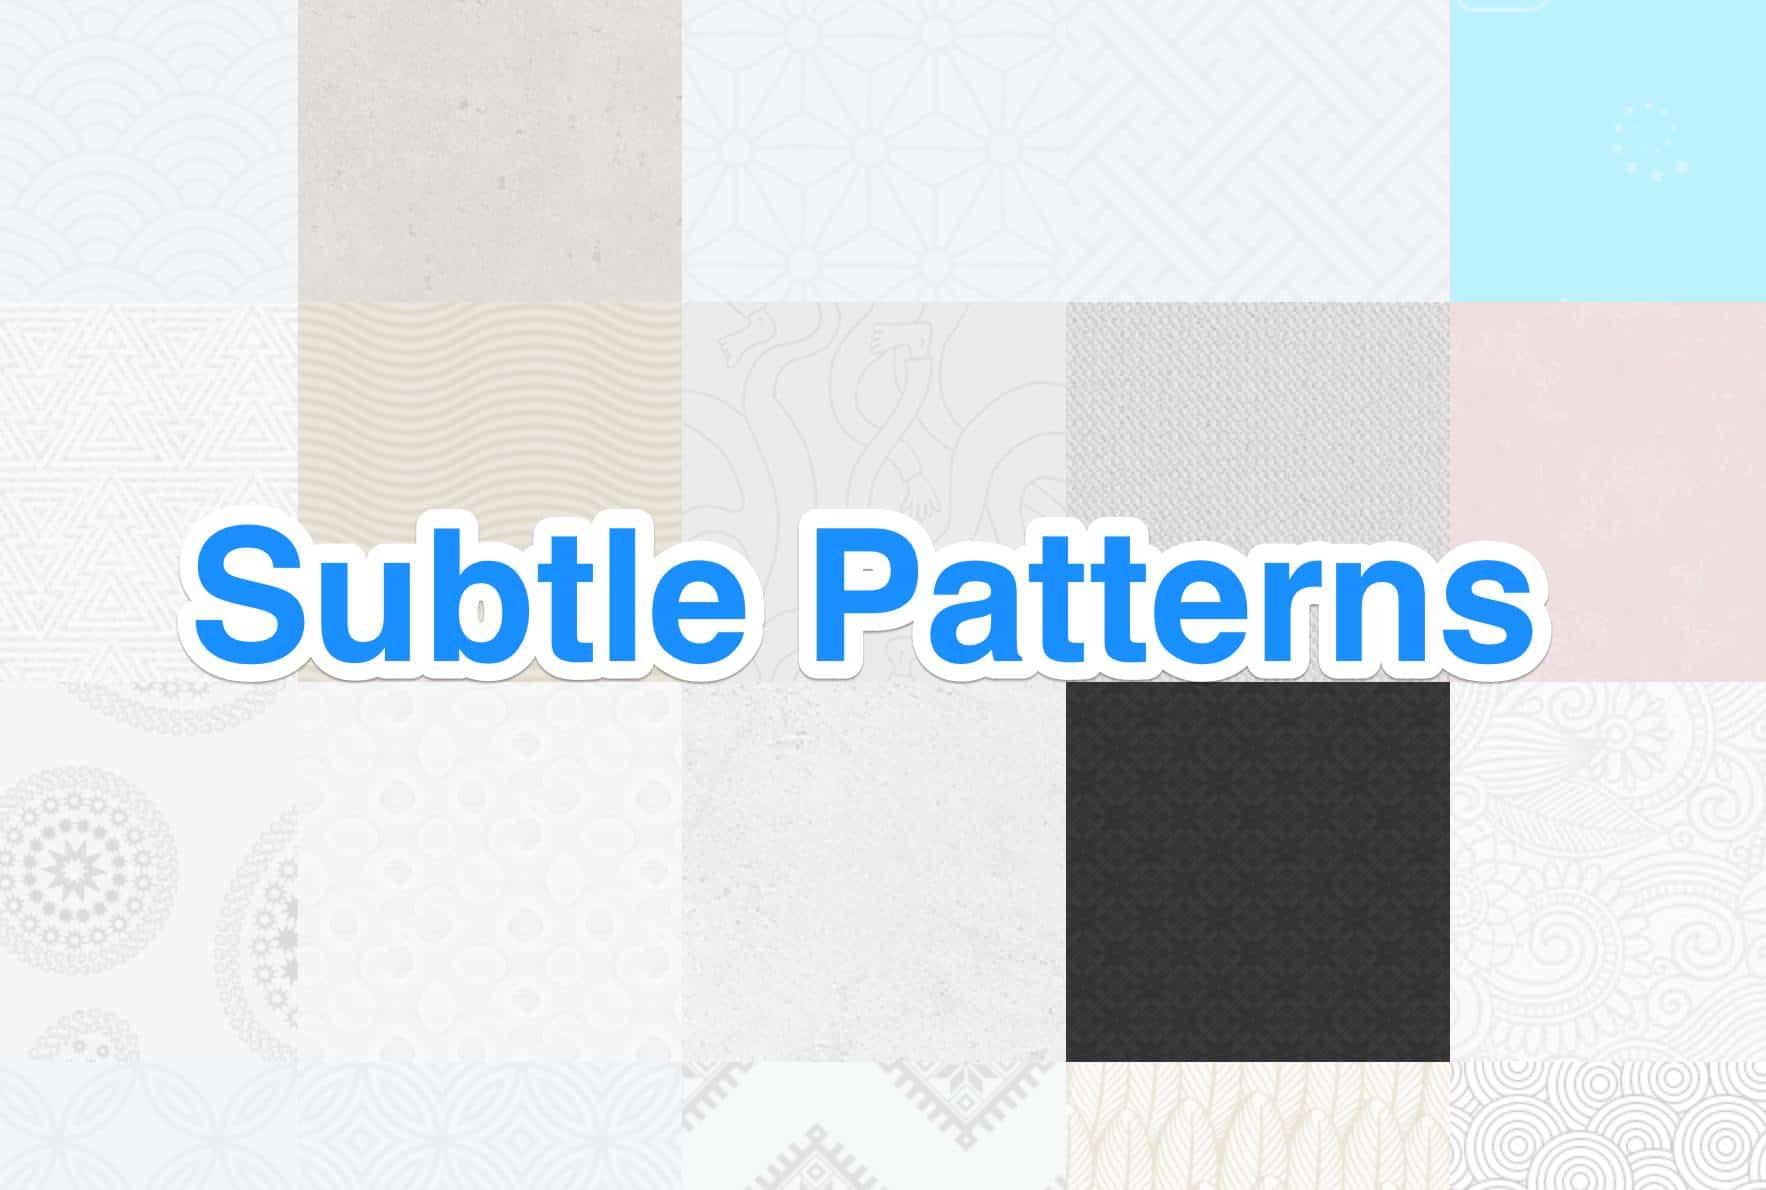 Subtle Patterns Free Textures For Your Next Web Project Press Avenue